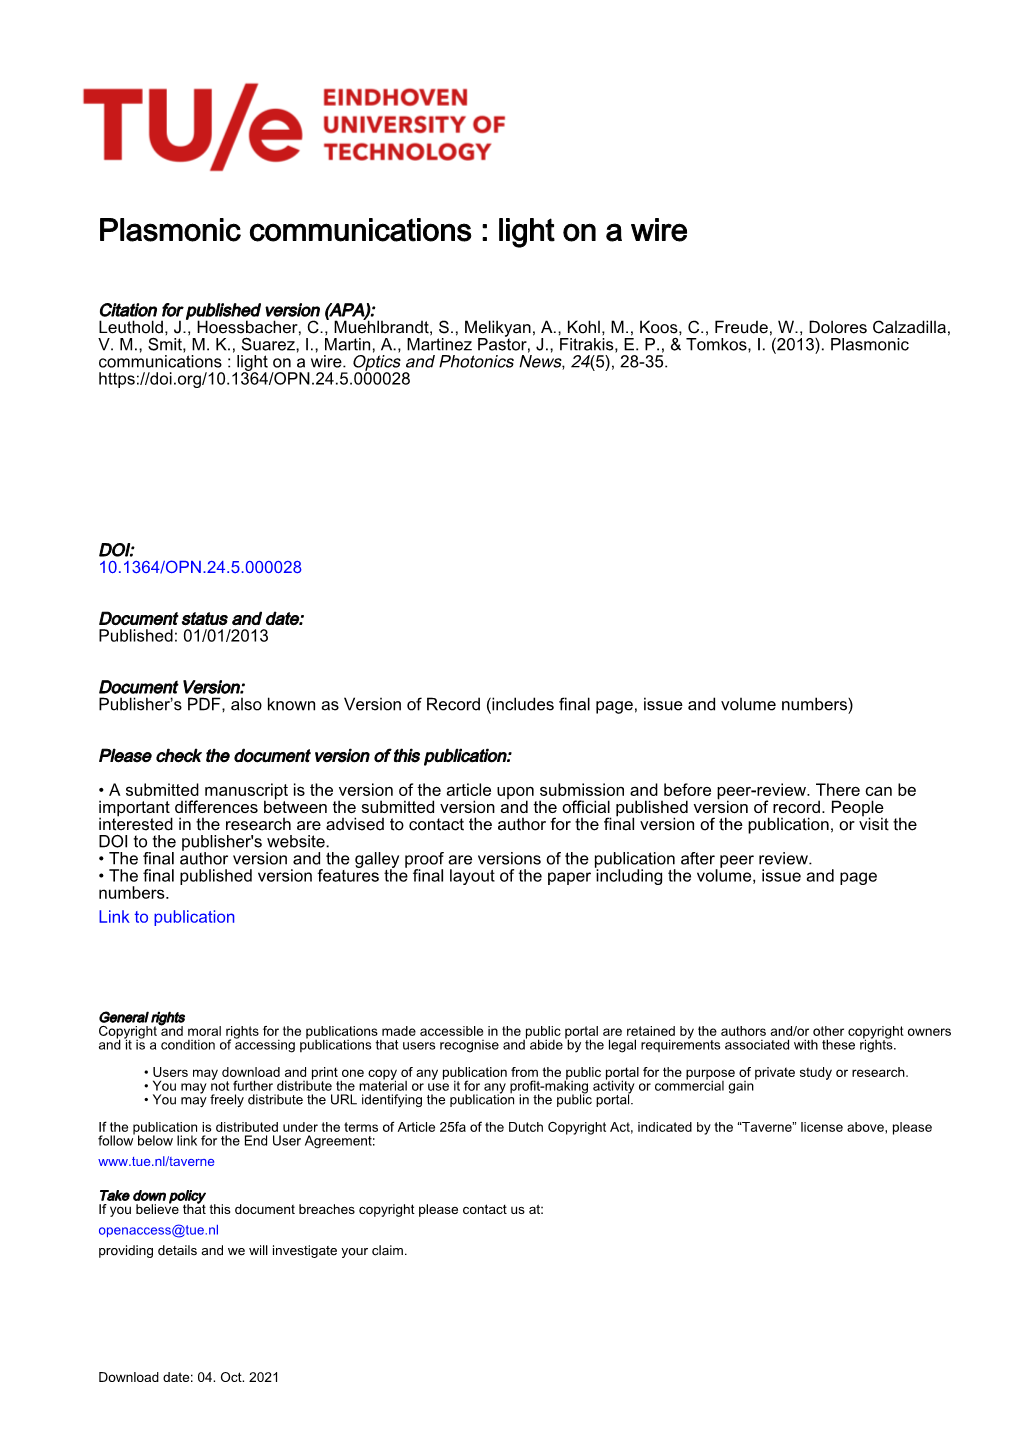 Plasmonic Communications : Light on a Wire